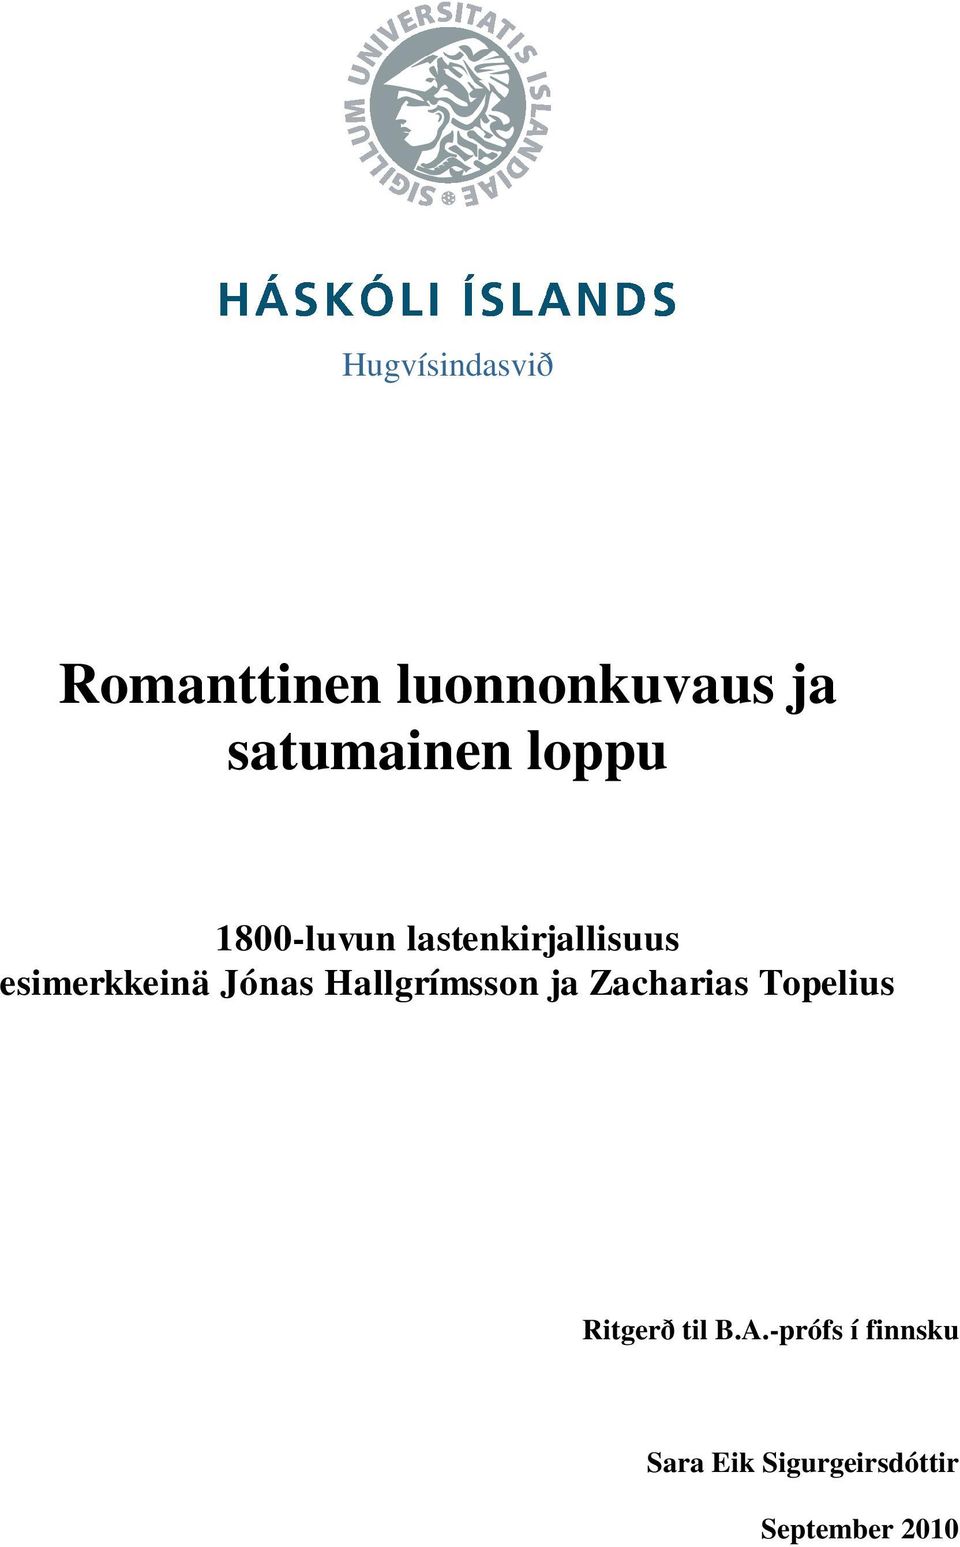 Hallgrímsson ja Zacharias Topelius Ritgerð til B.A.